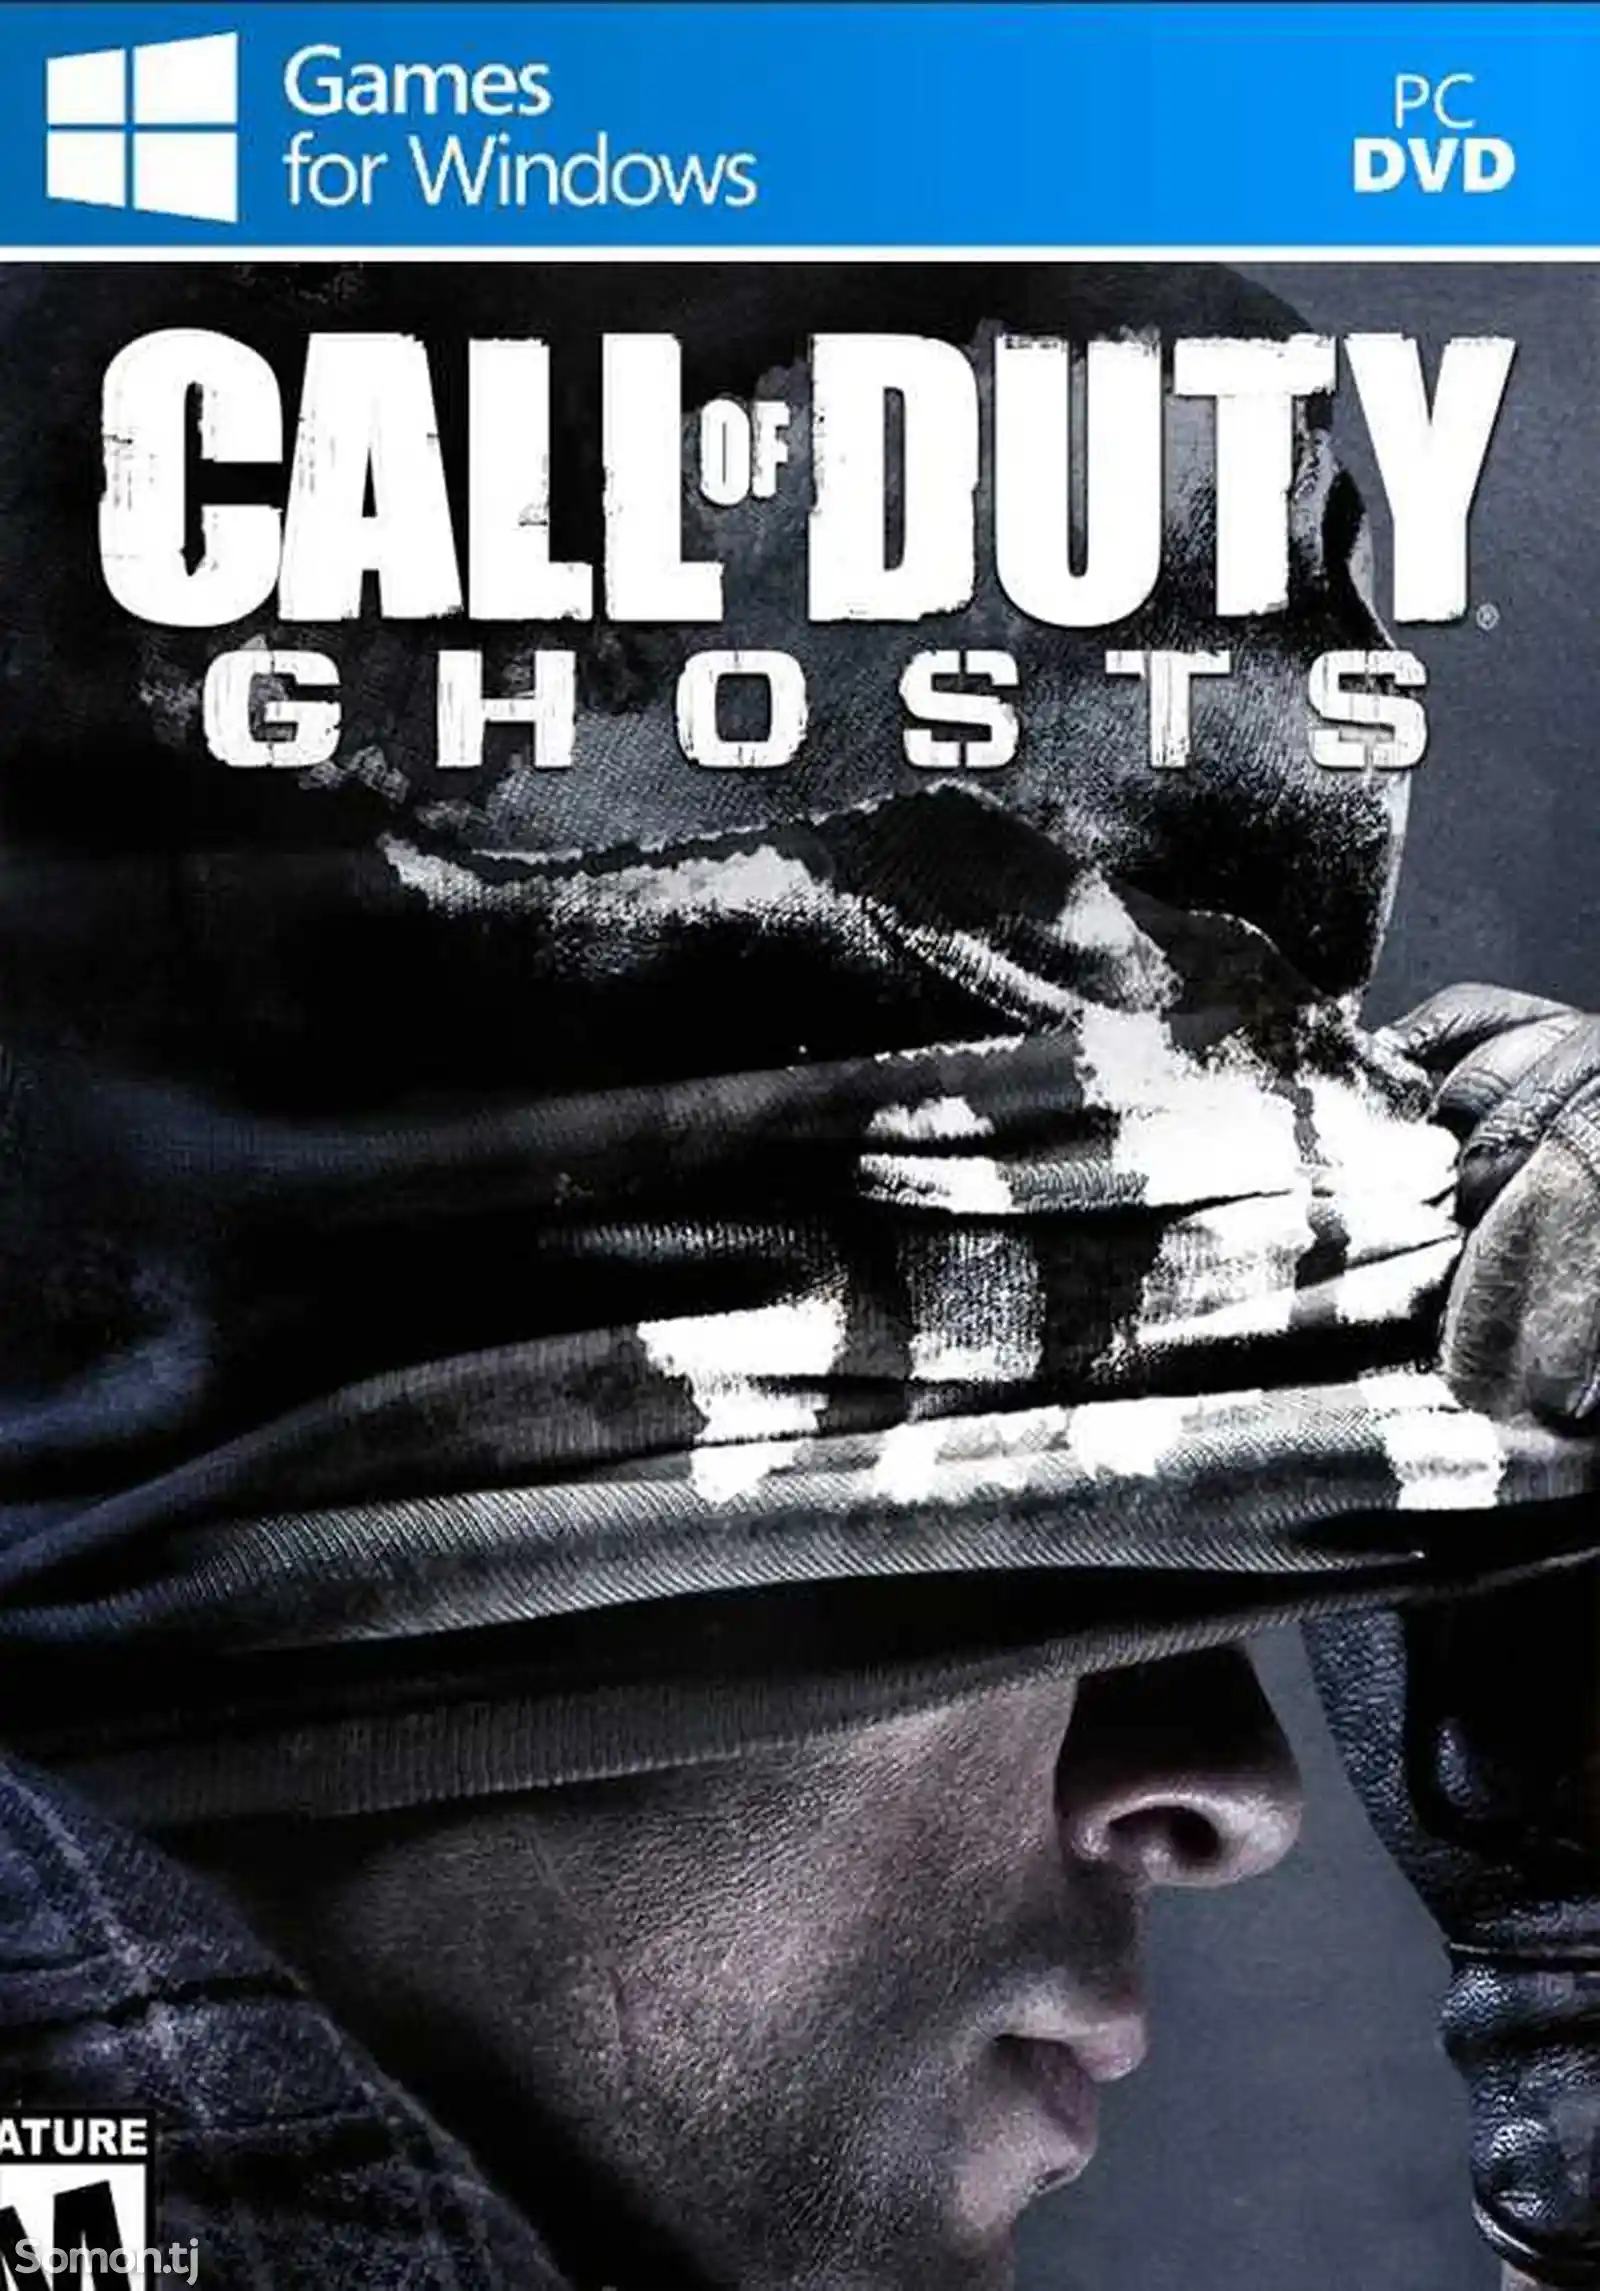 Игра Call of duty ghosts 2013 для компьютера-пк-pc-1